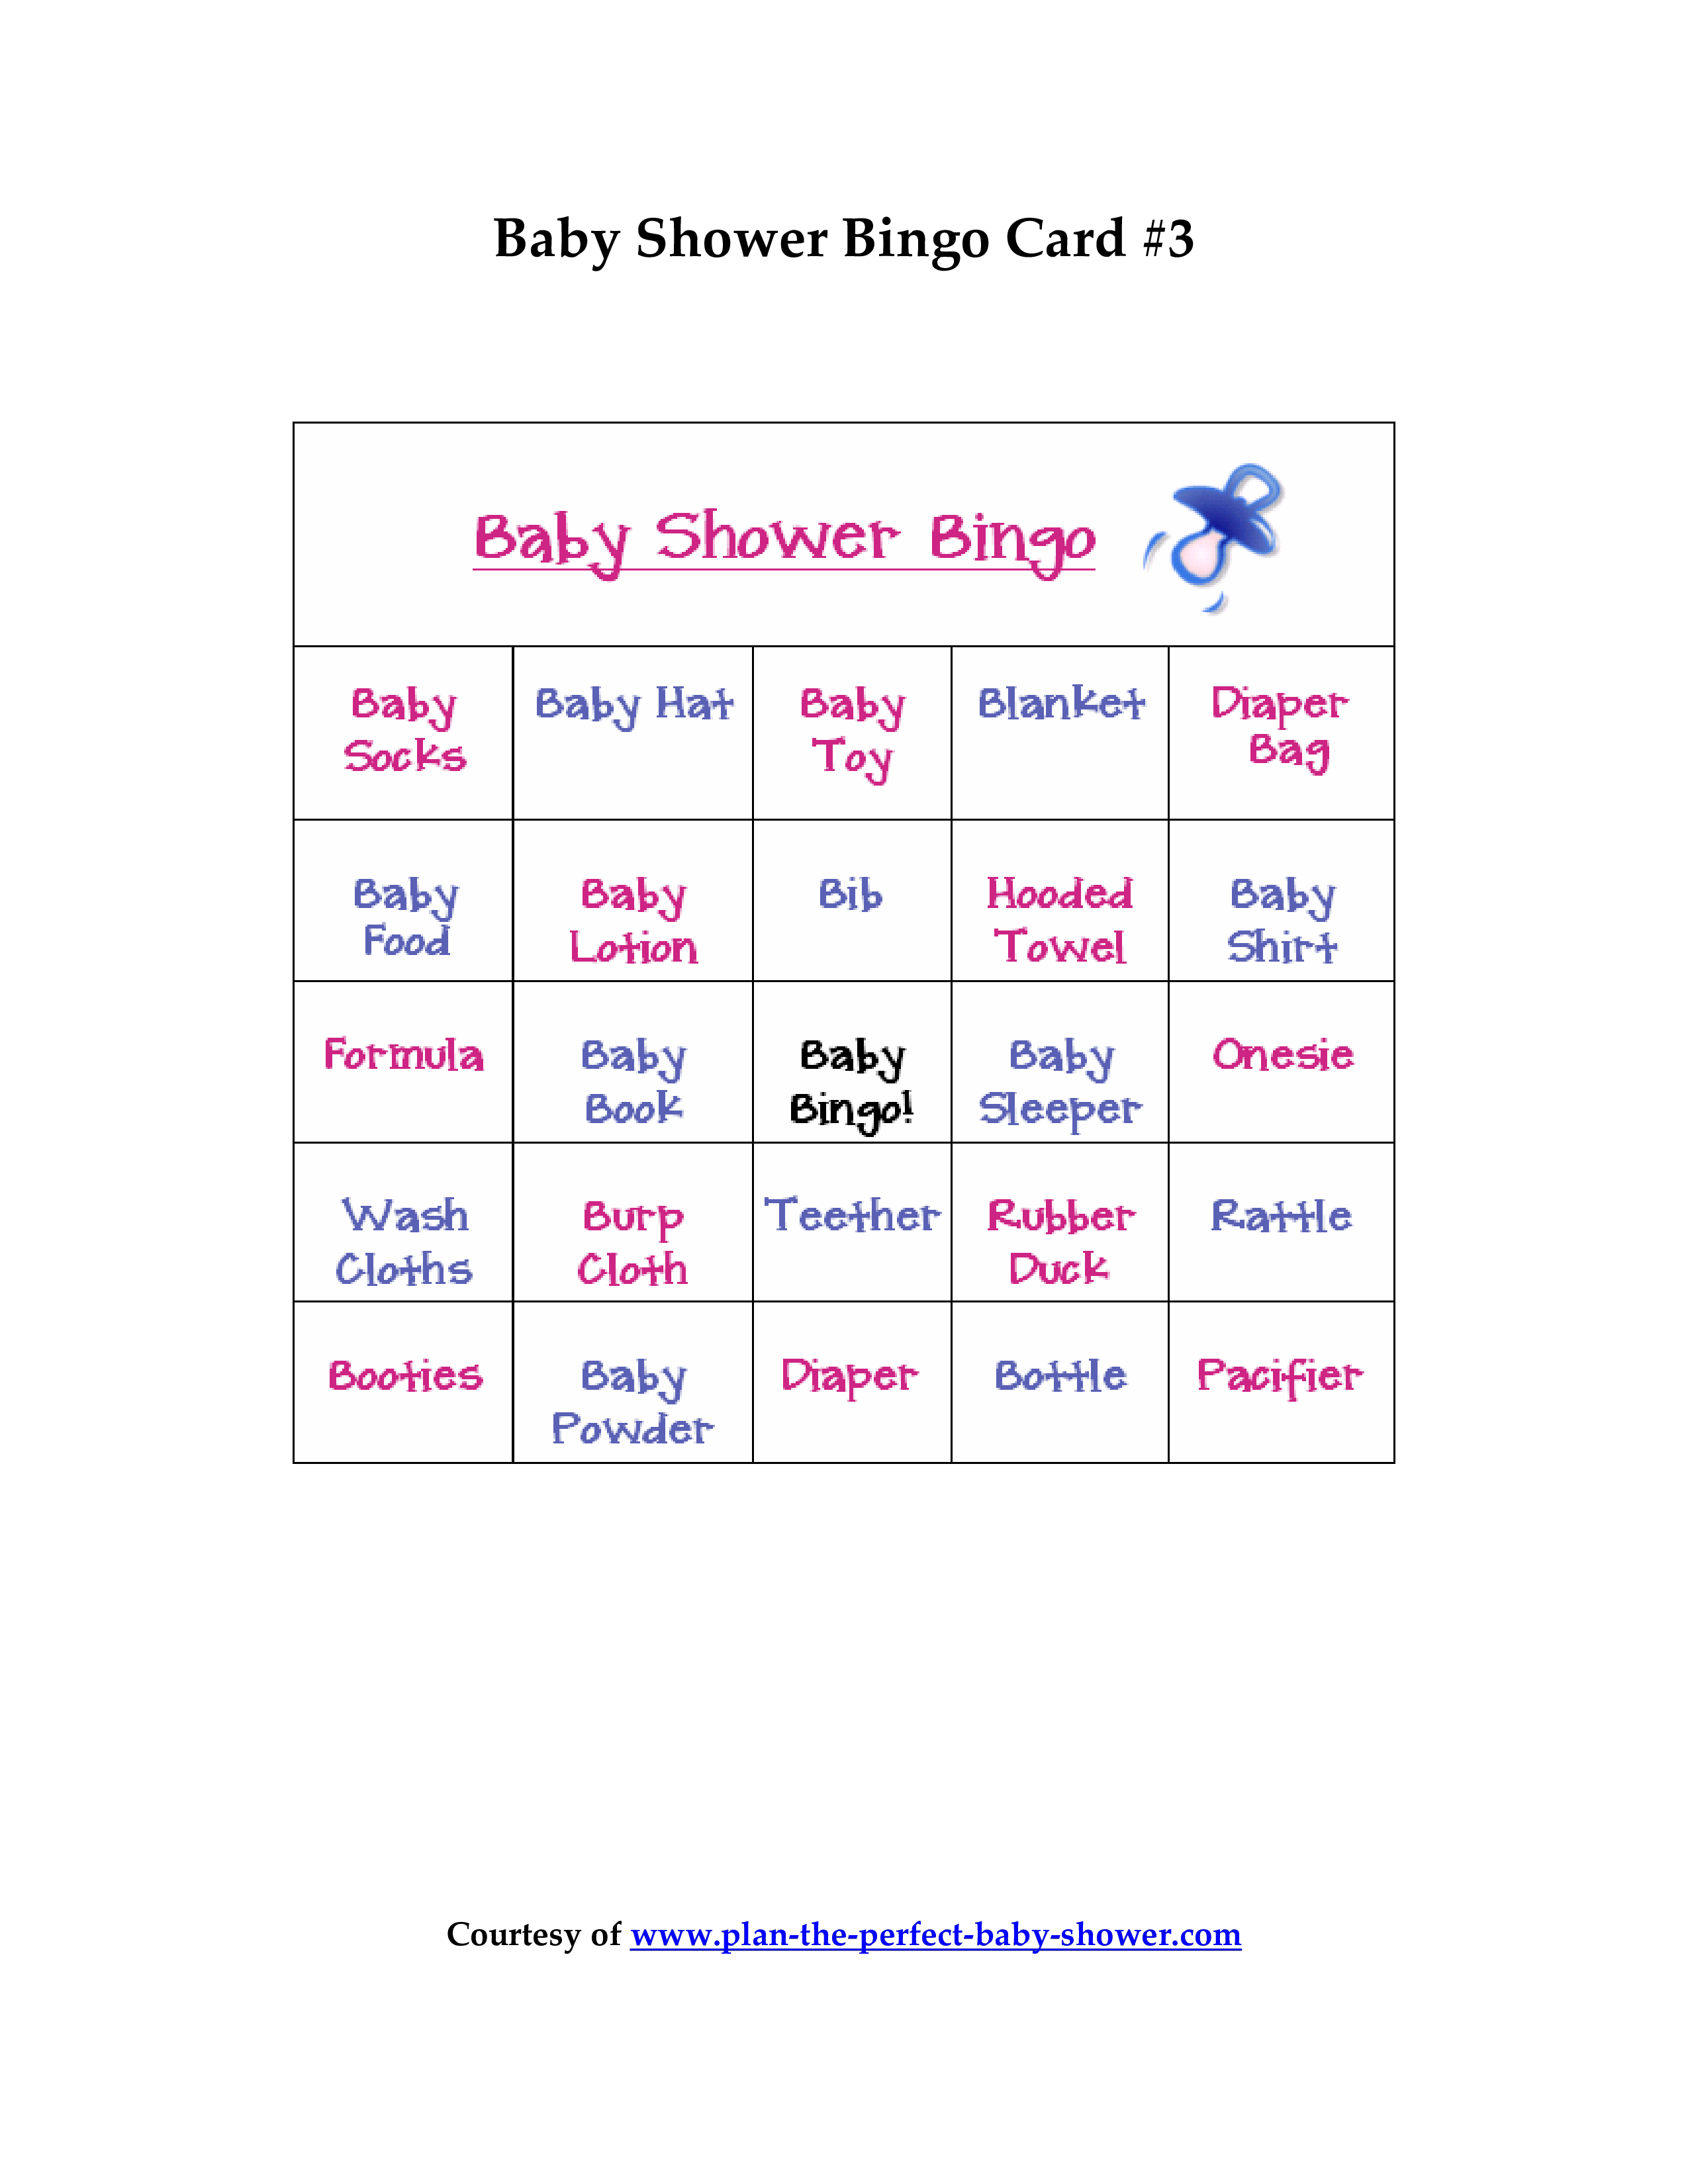 Baby Shower Bingo Card main image